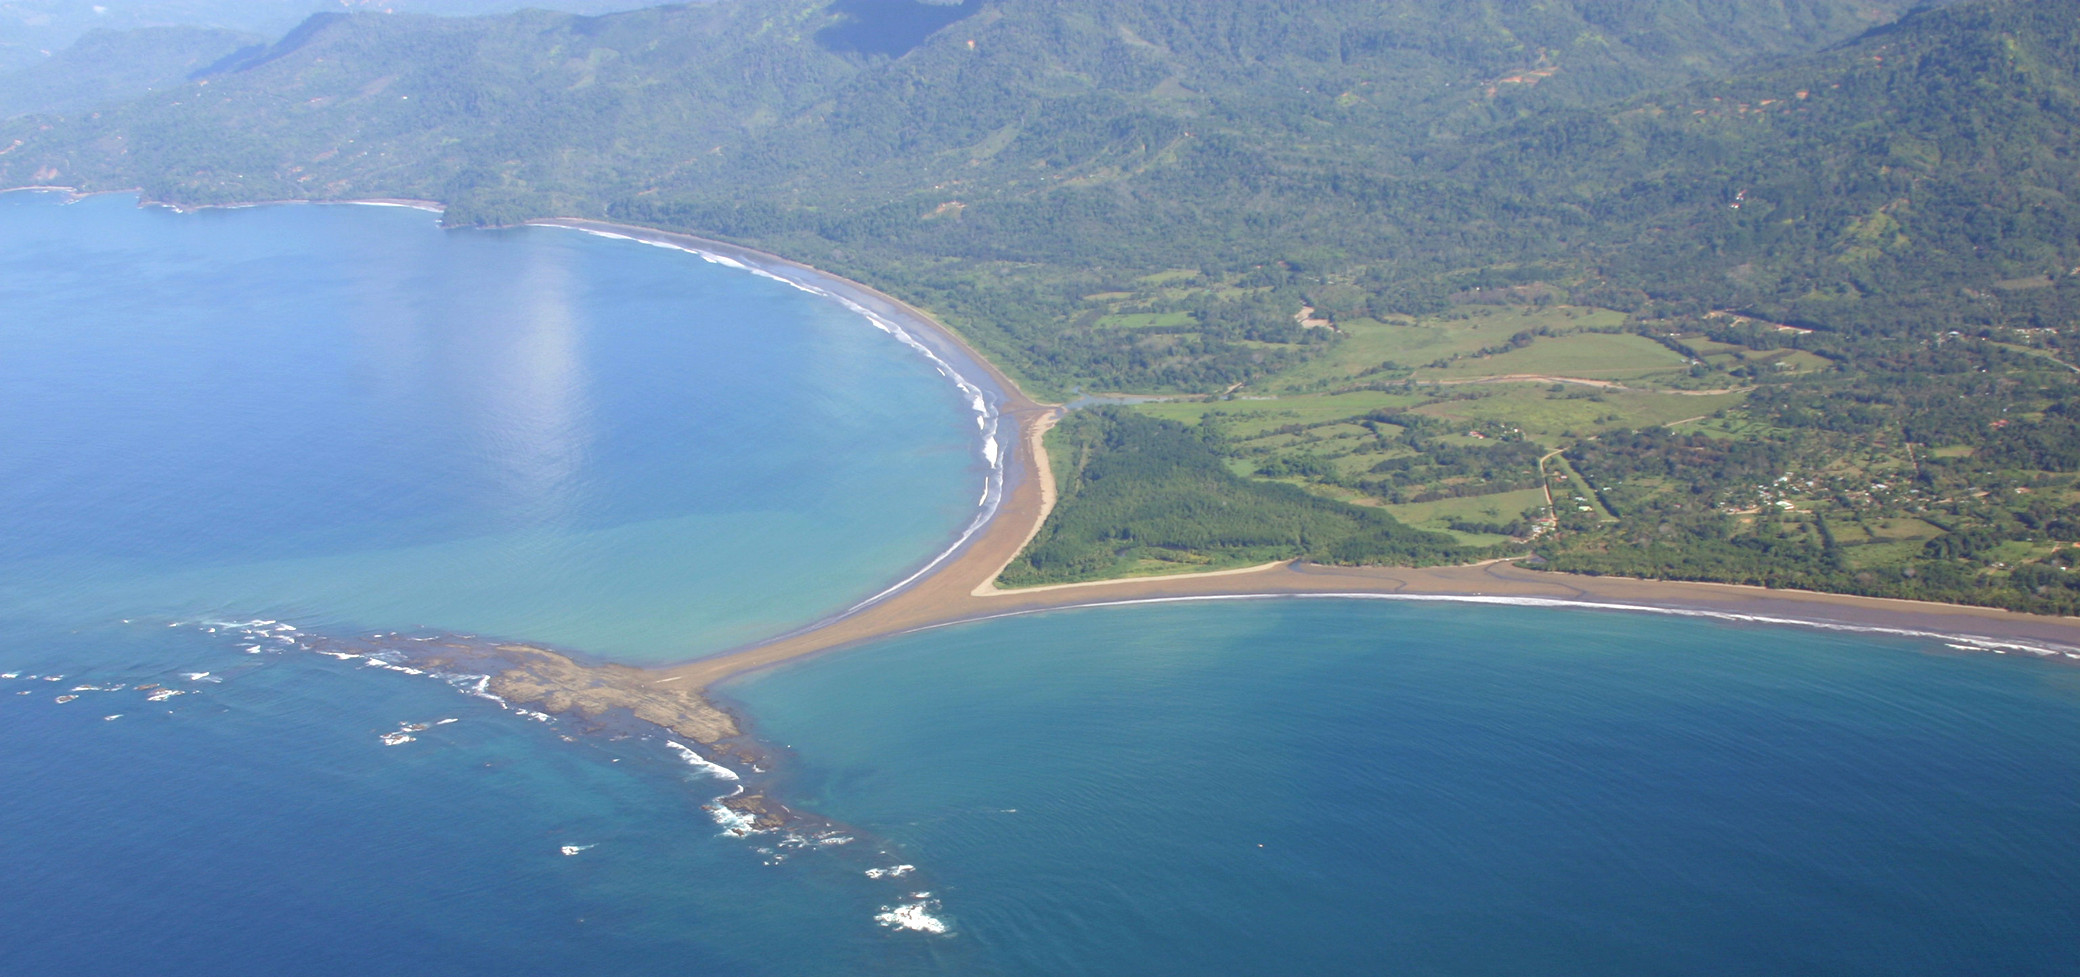 tourhub | YellowWood Adventures | Ecotourism in Costa Rica; rainforests, coffee & coastline 